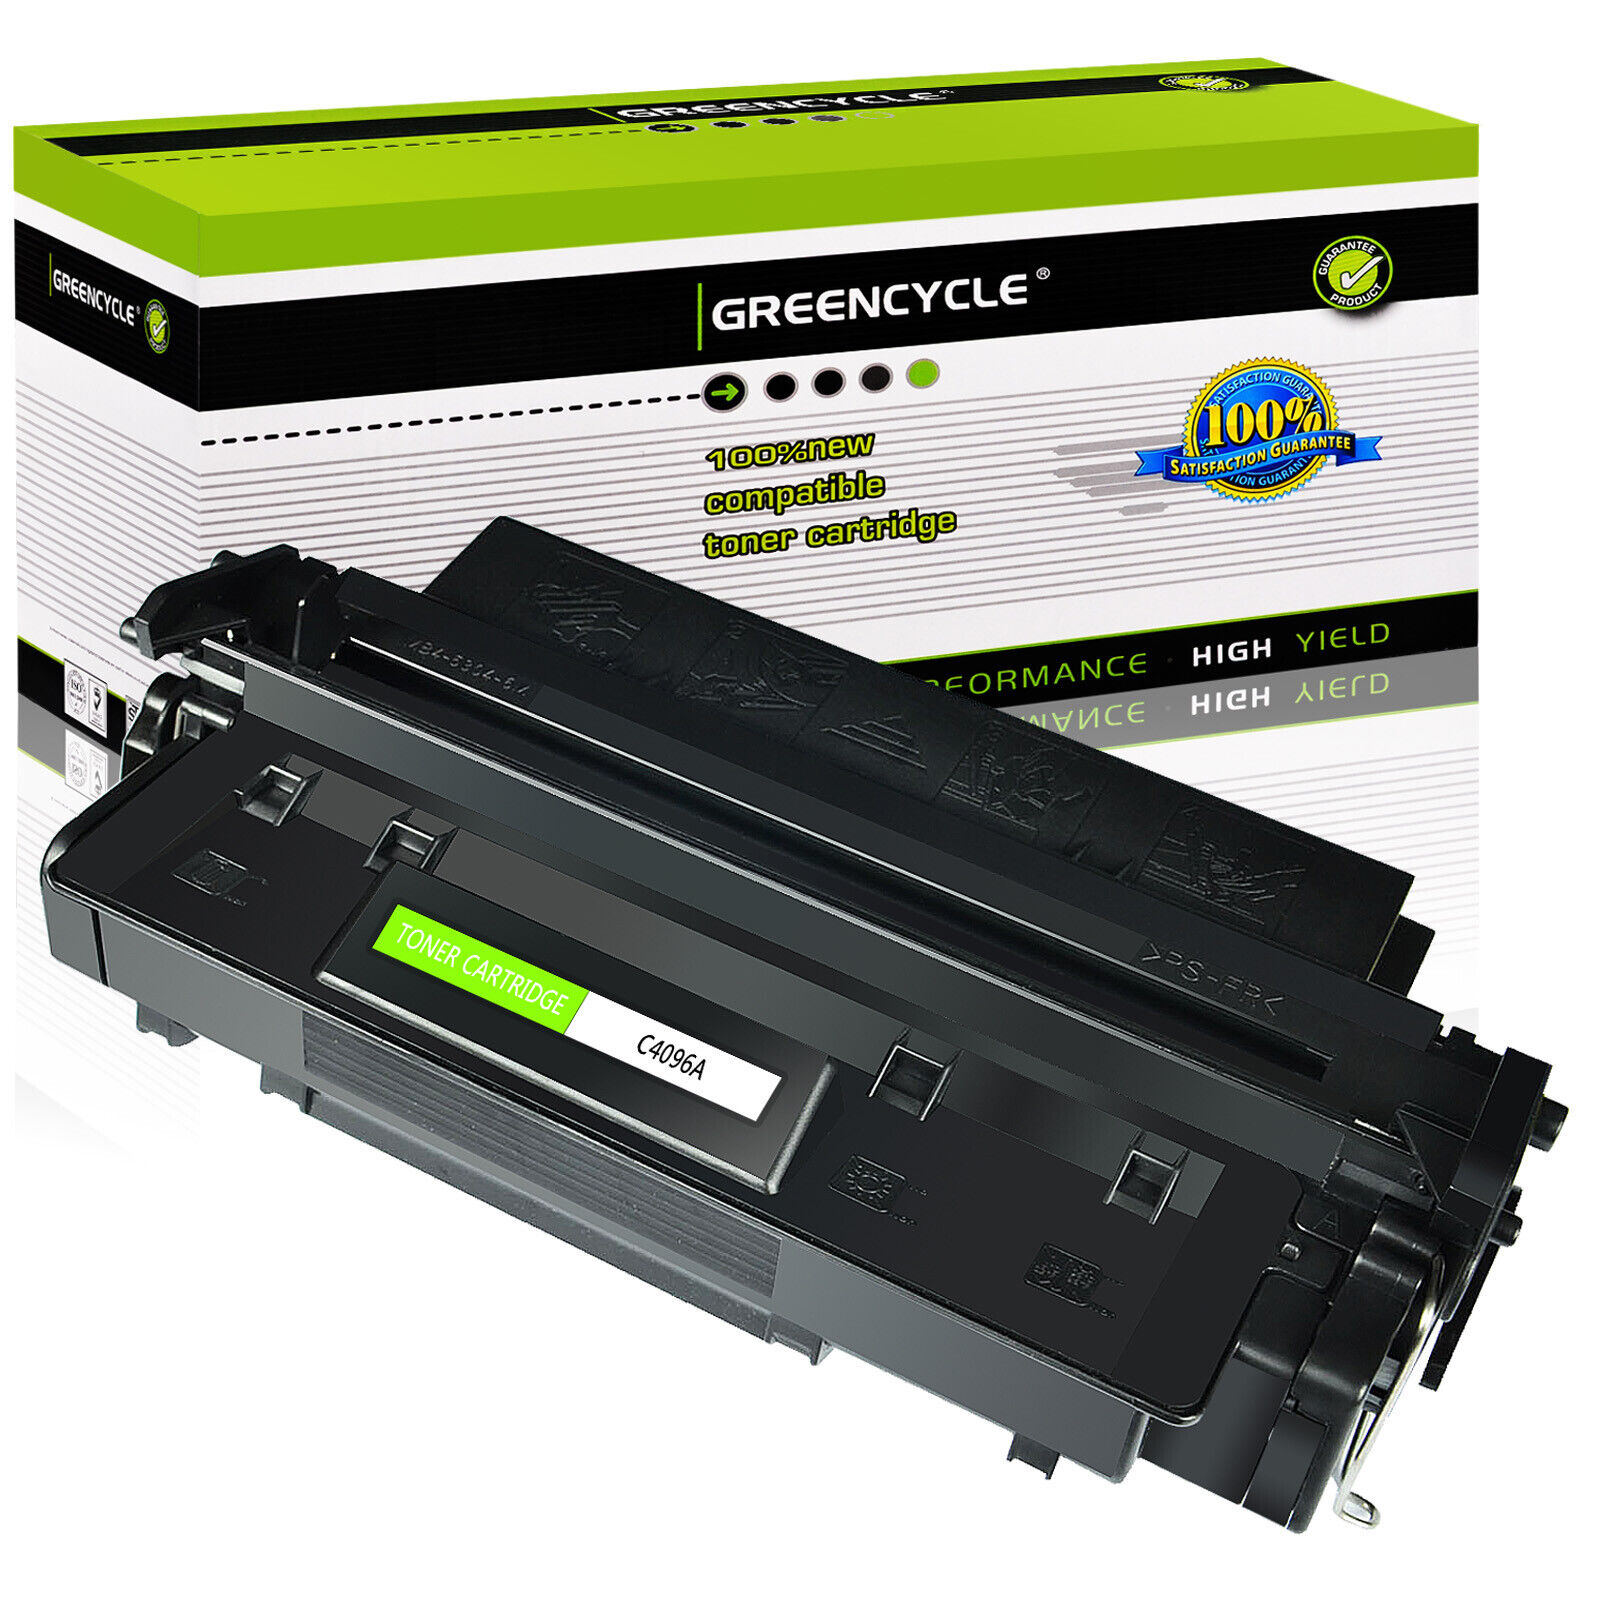 GREENCYCLE C4096A 96A Toner Cartridge For HP LaserJet 2100tn 2200 2200d Printer